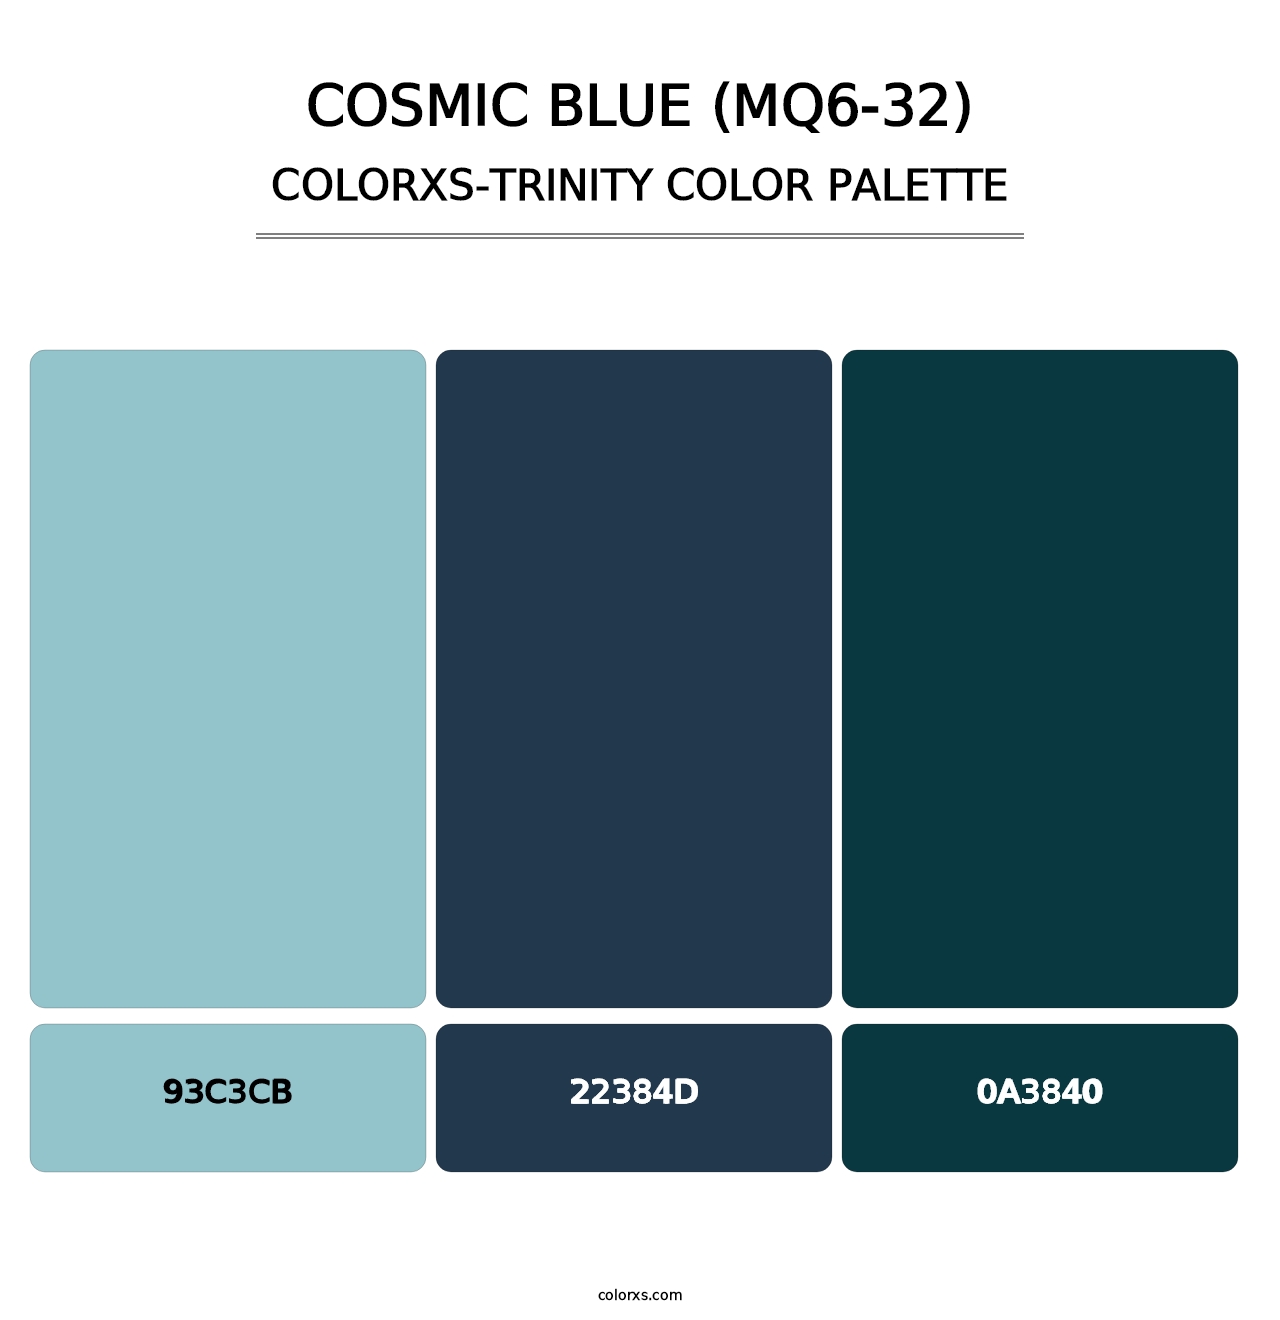 Cosmic Blue (MQ6-32) - Colorxs Trinity Palette